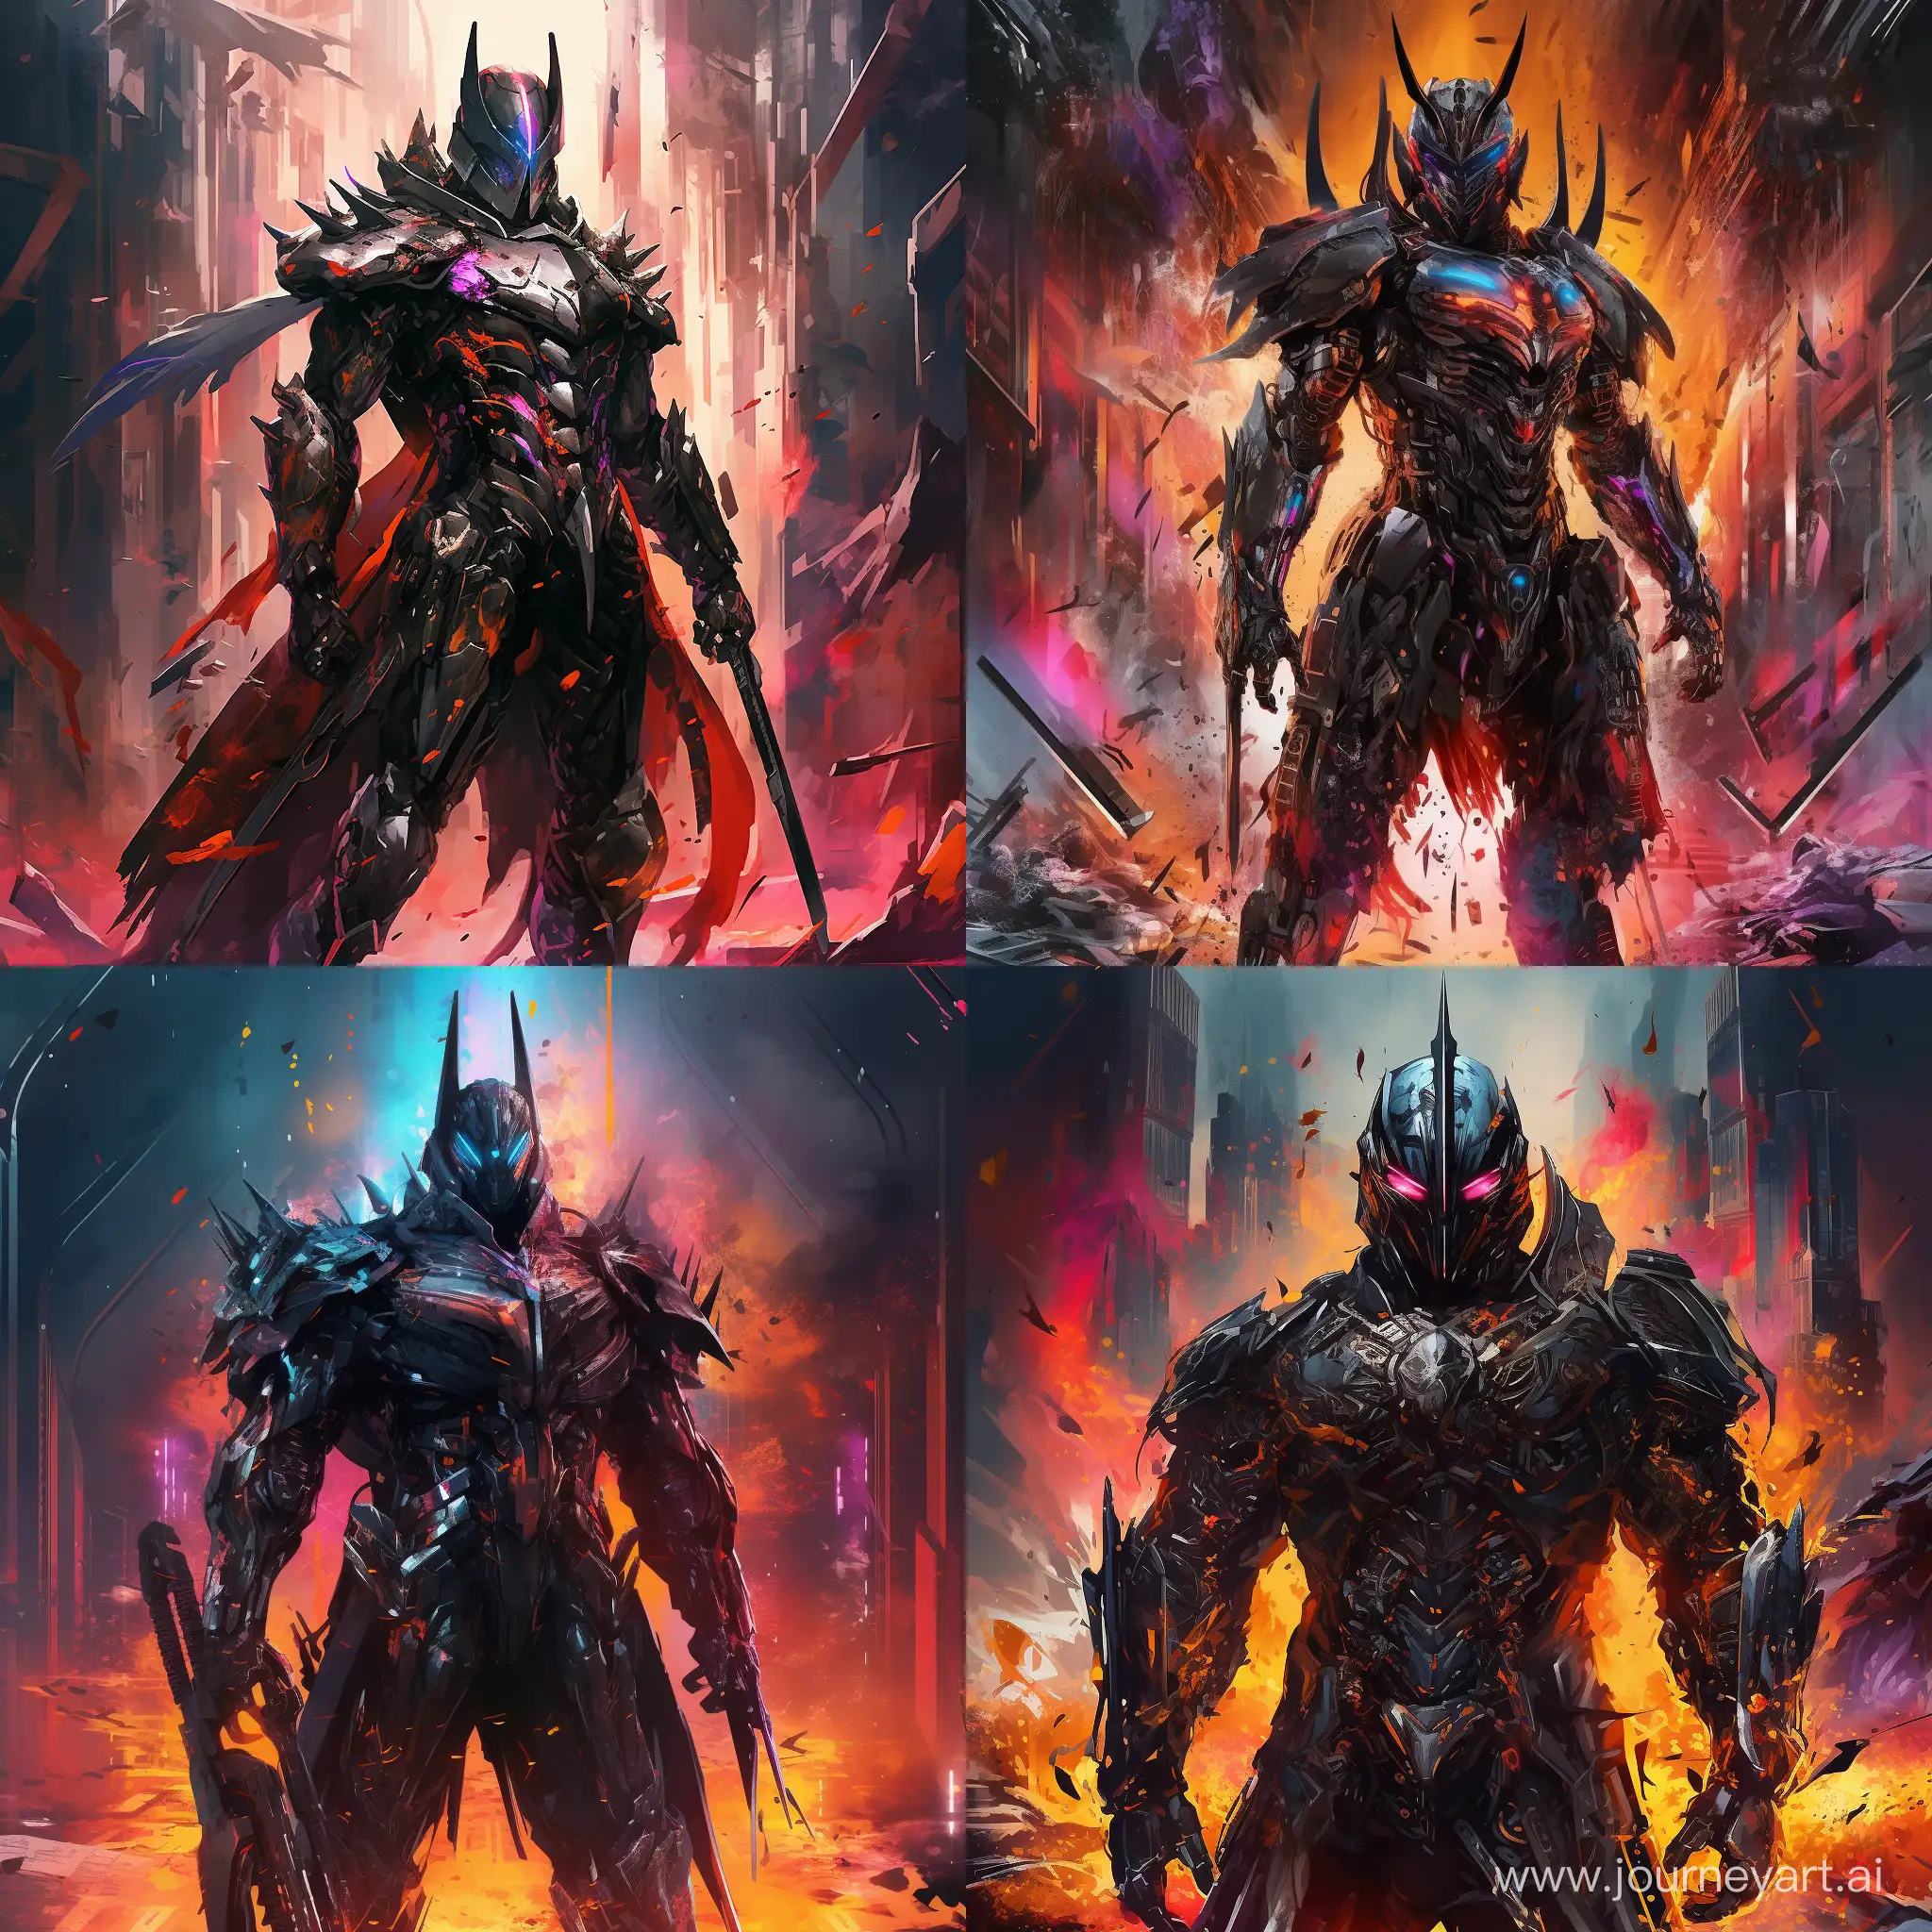 Cyberpunk-Black-Knight-in-Vibrant-Armor-Stands-Tall